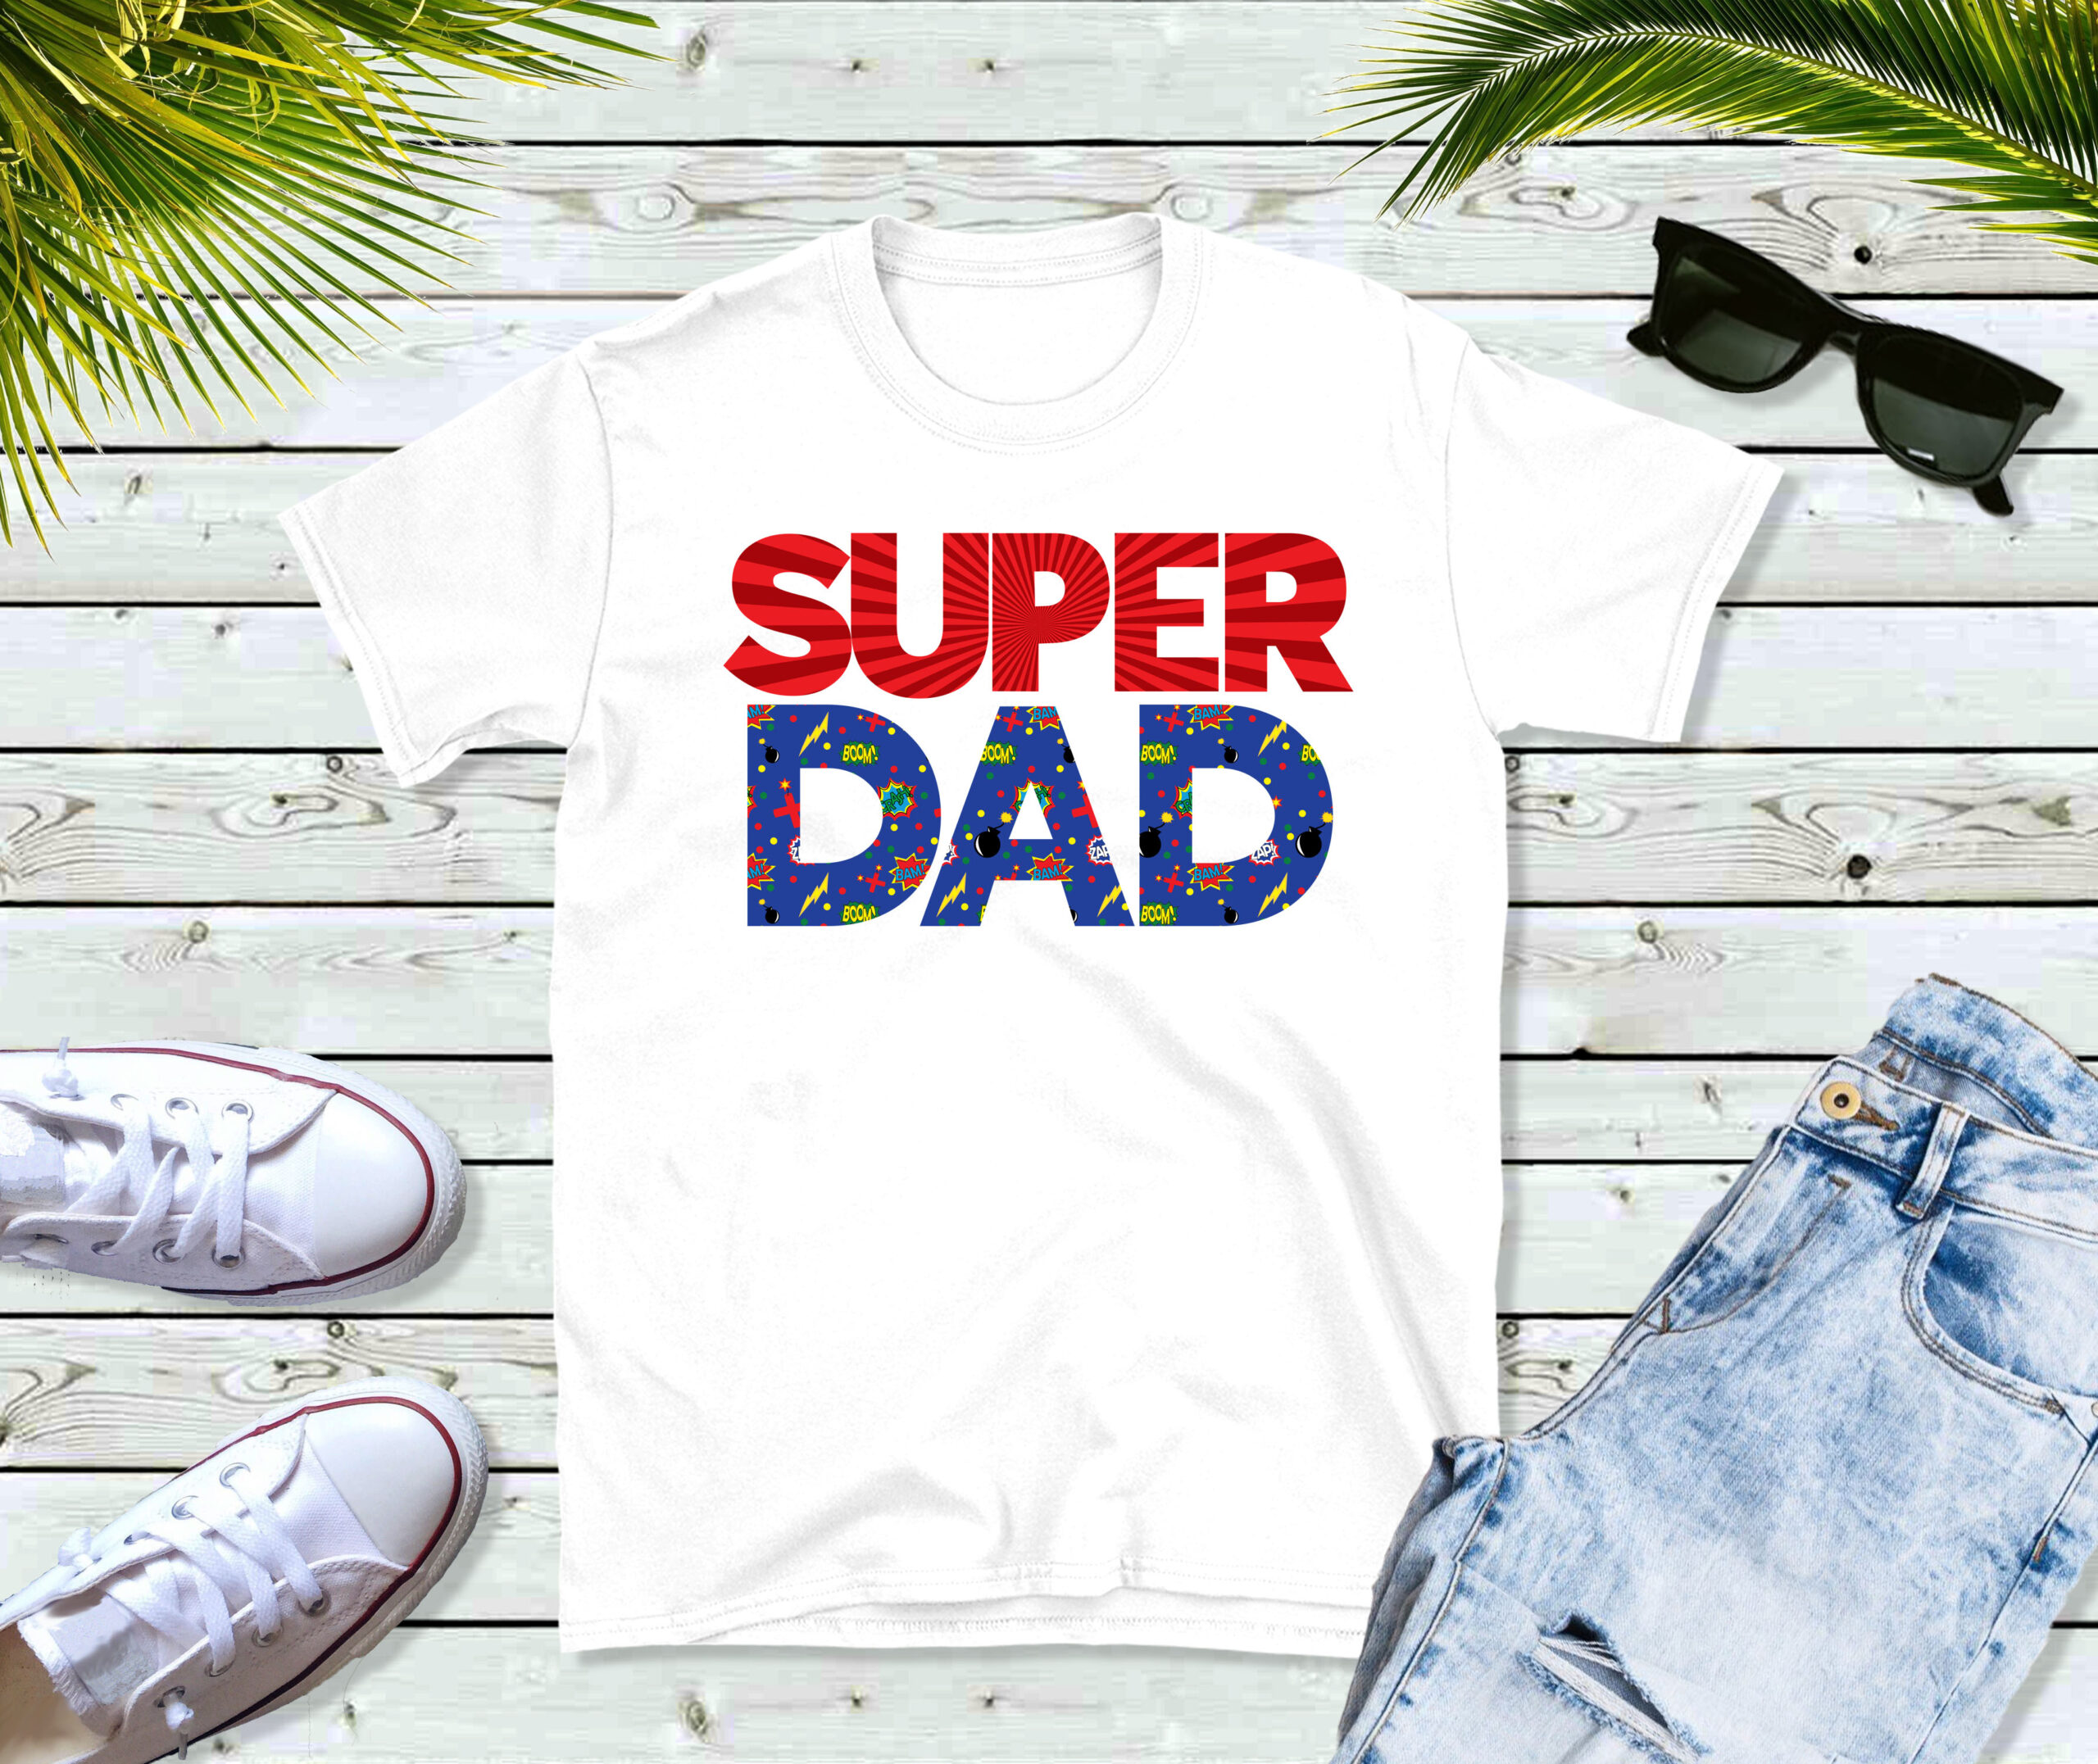 Free Super Dad Sublimation Image